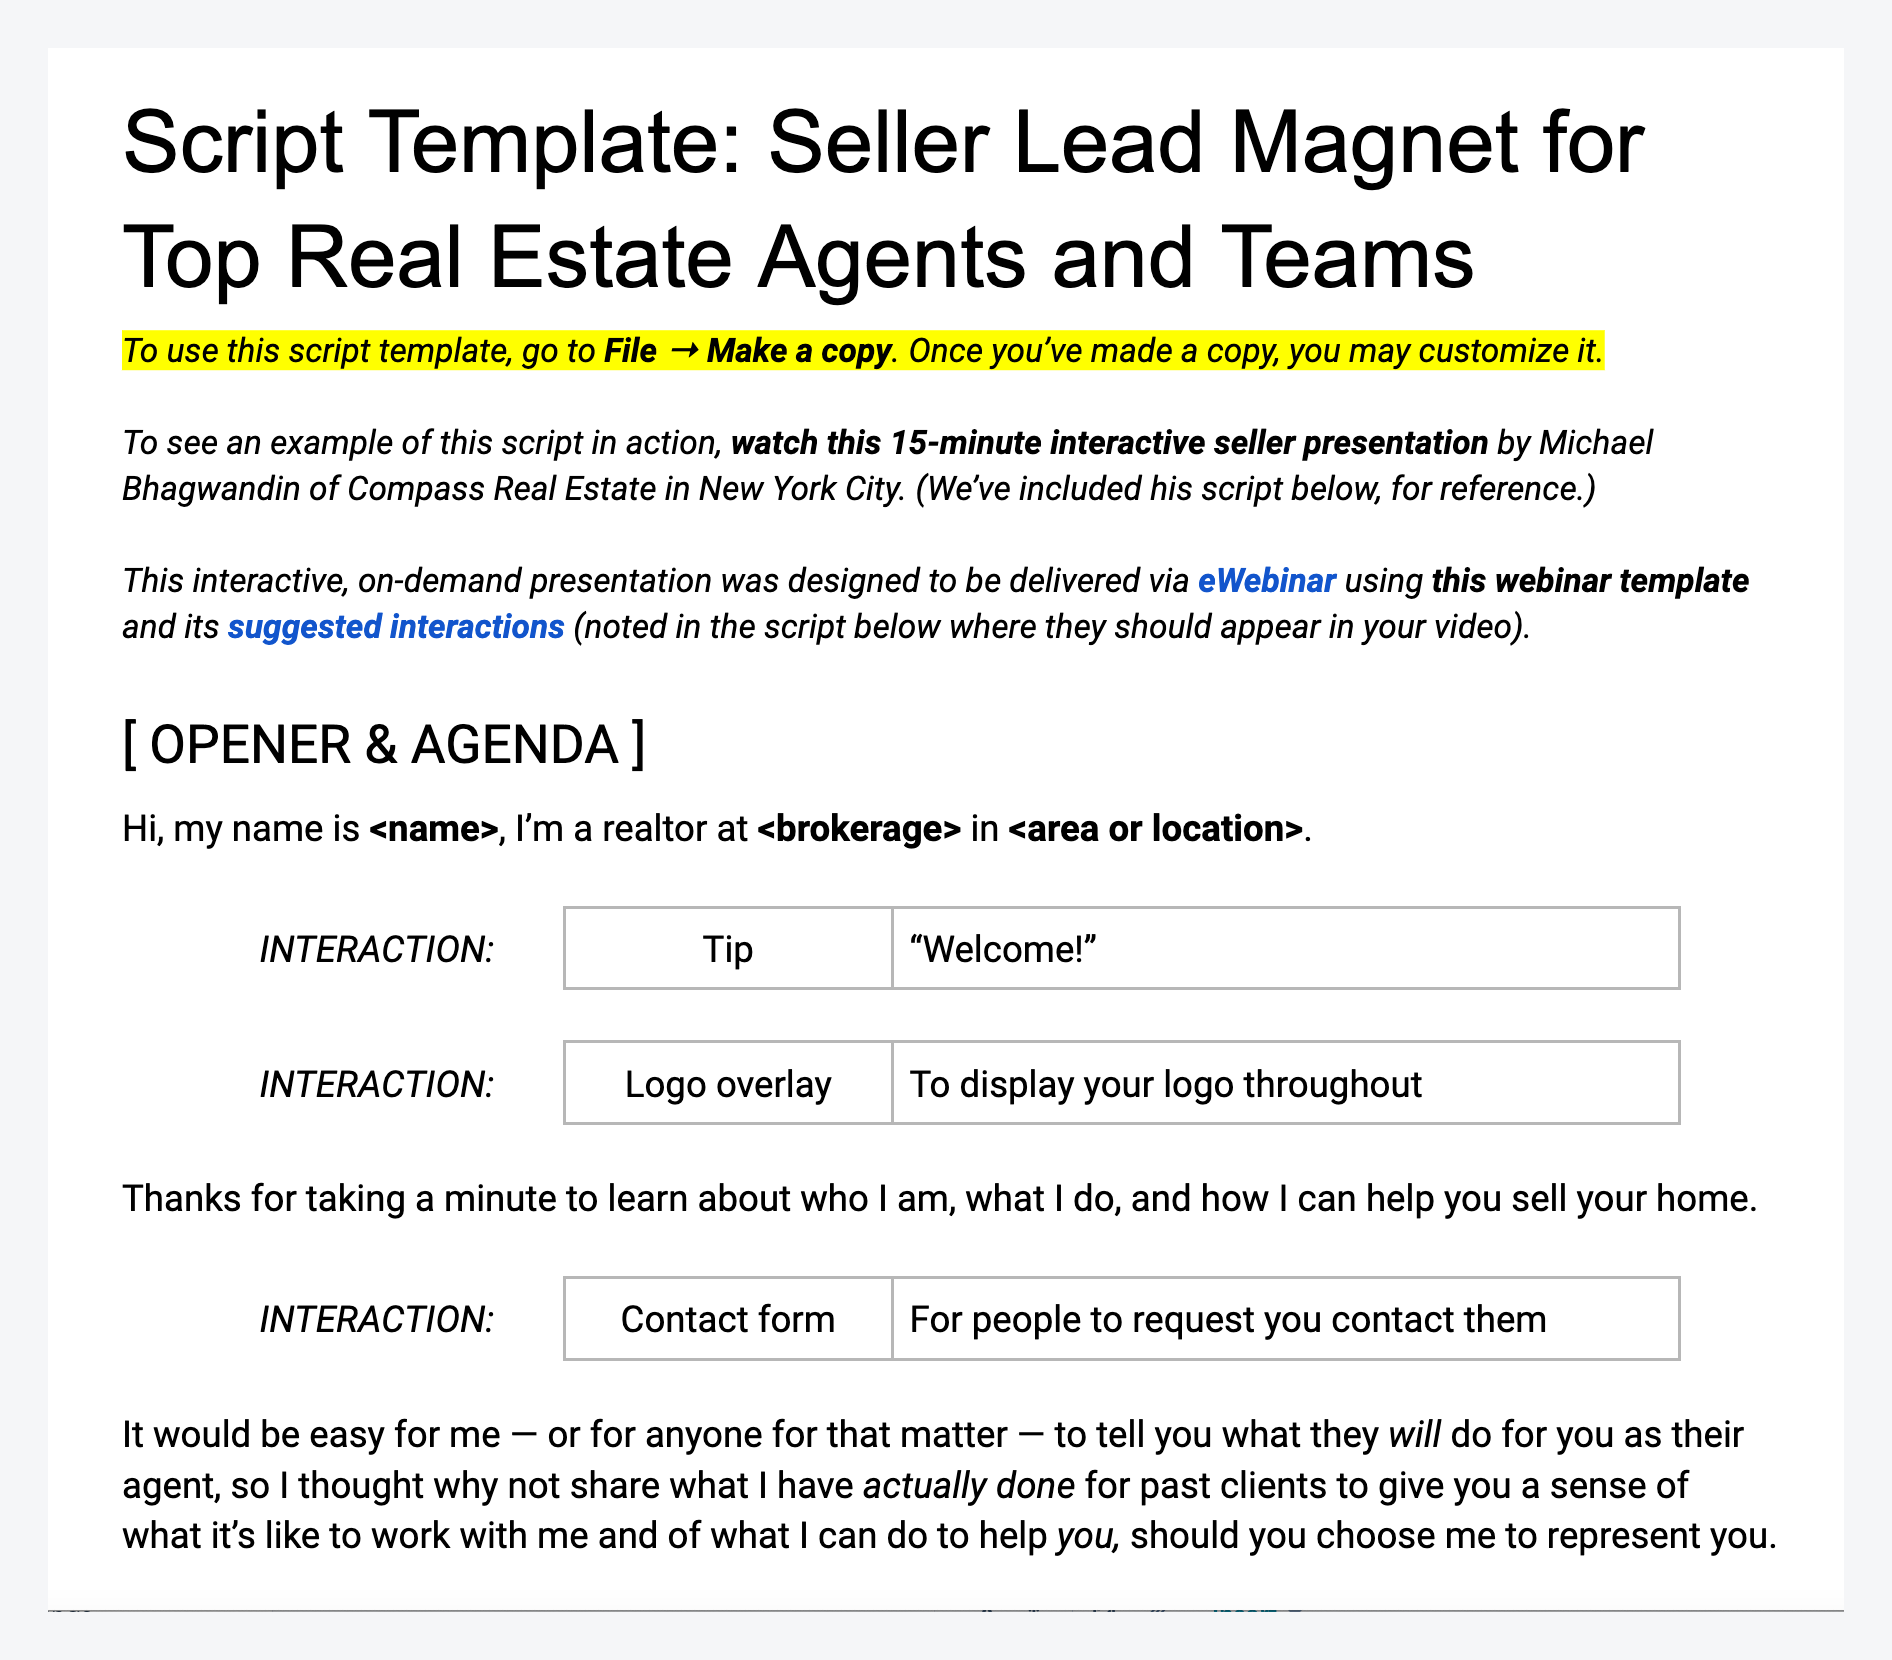 Seller lead magnet script template